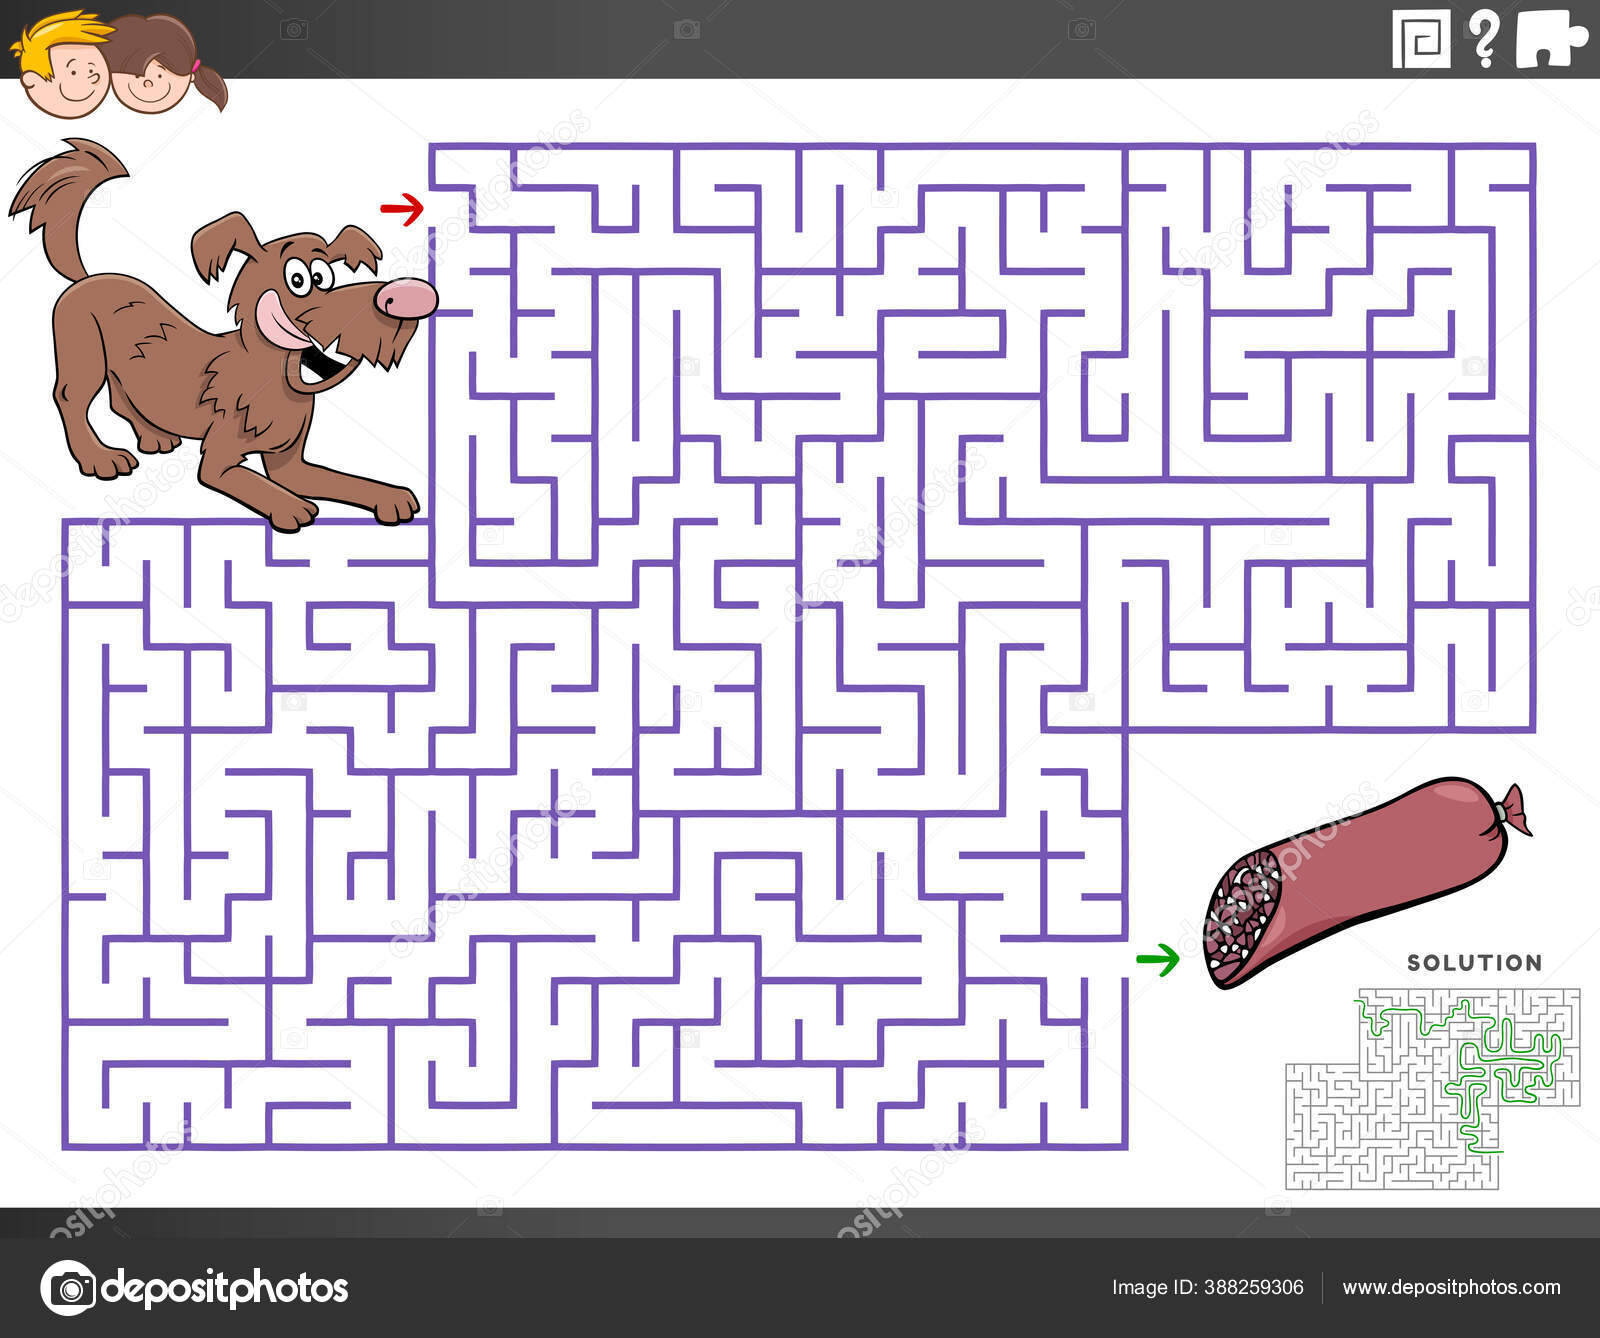 https://st4.depositphotos.com/1024768/38825/v/1600/depositphotos_388259306-stock-illustration-cartoon-illustration-educational-maze-puzzle.jpg